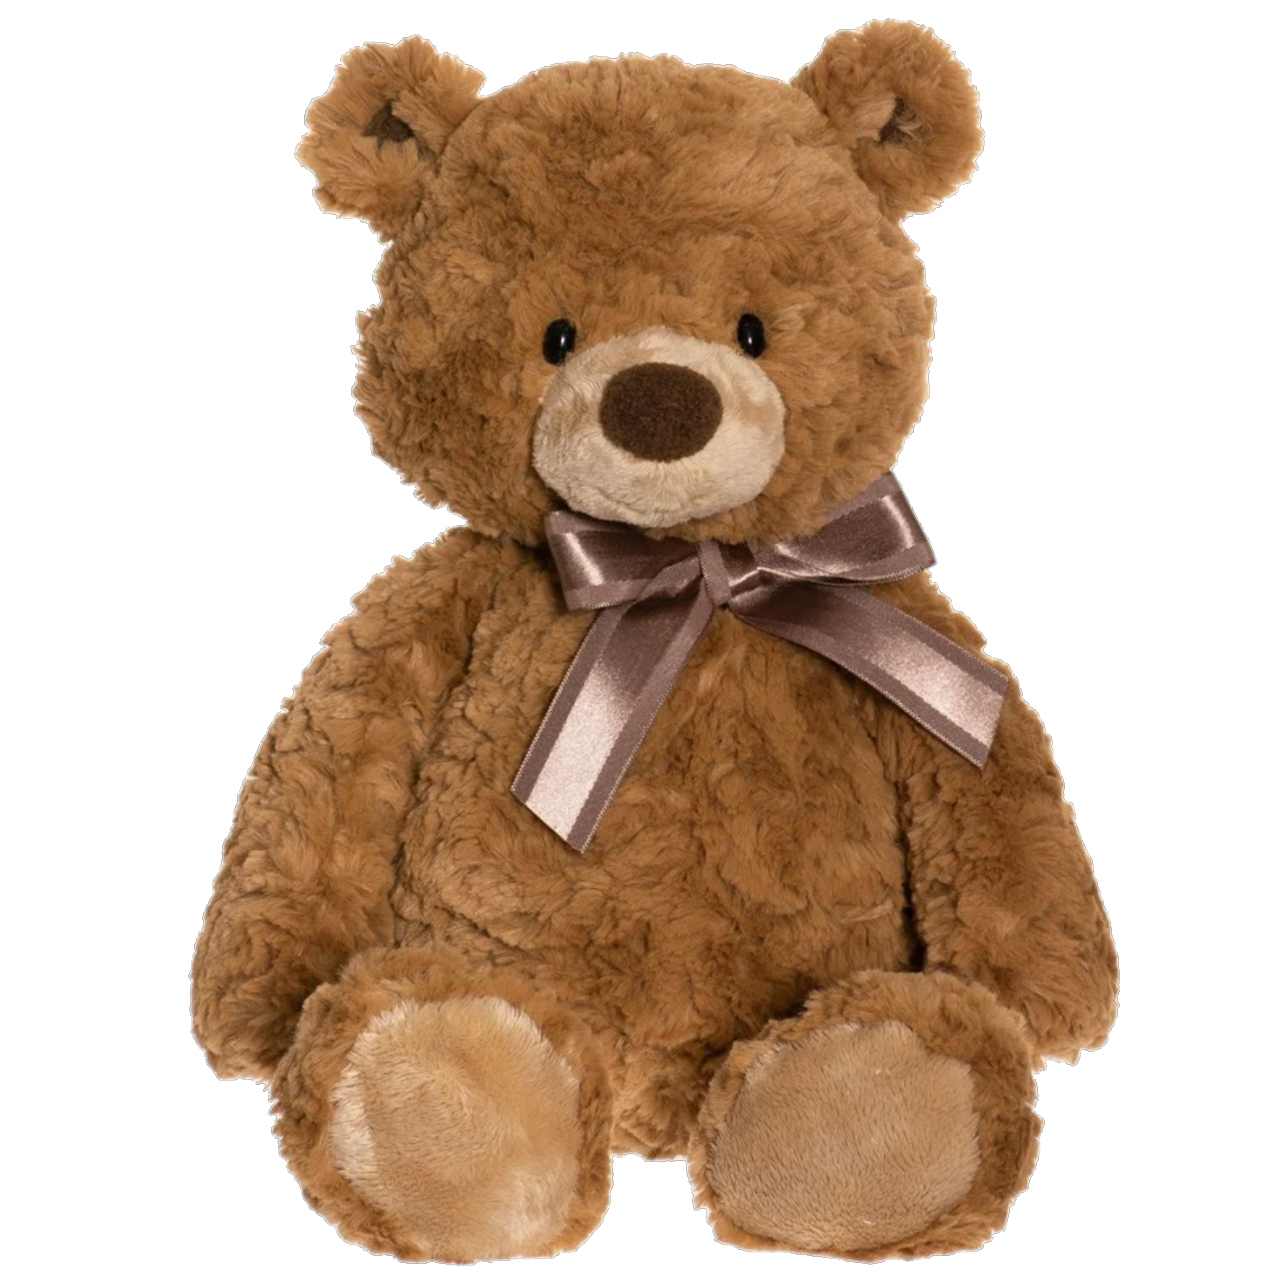 A brown teddy bear. Тедди Беар. Плюшевый мишка коричневый. Медведь коричневый мягкая игрушка. Плюшевый медведь коричневый.